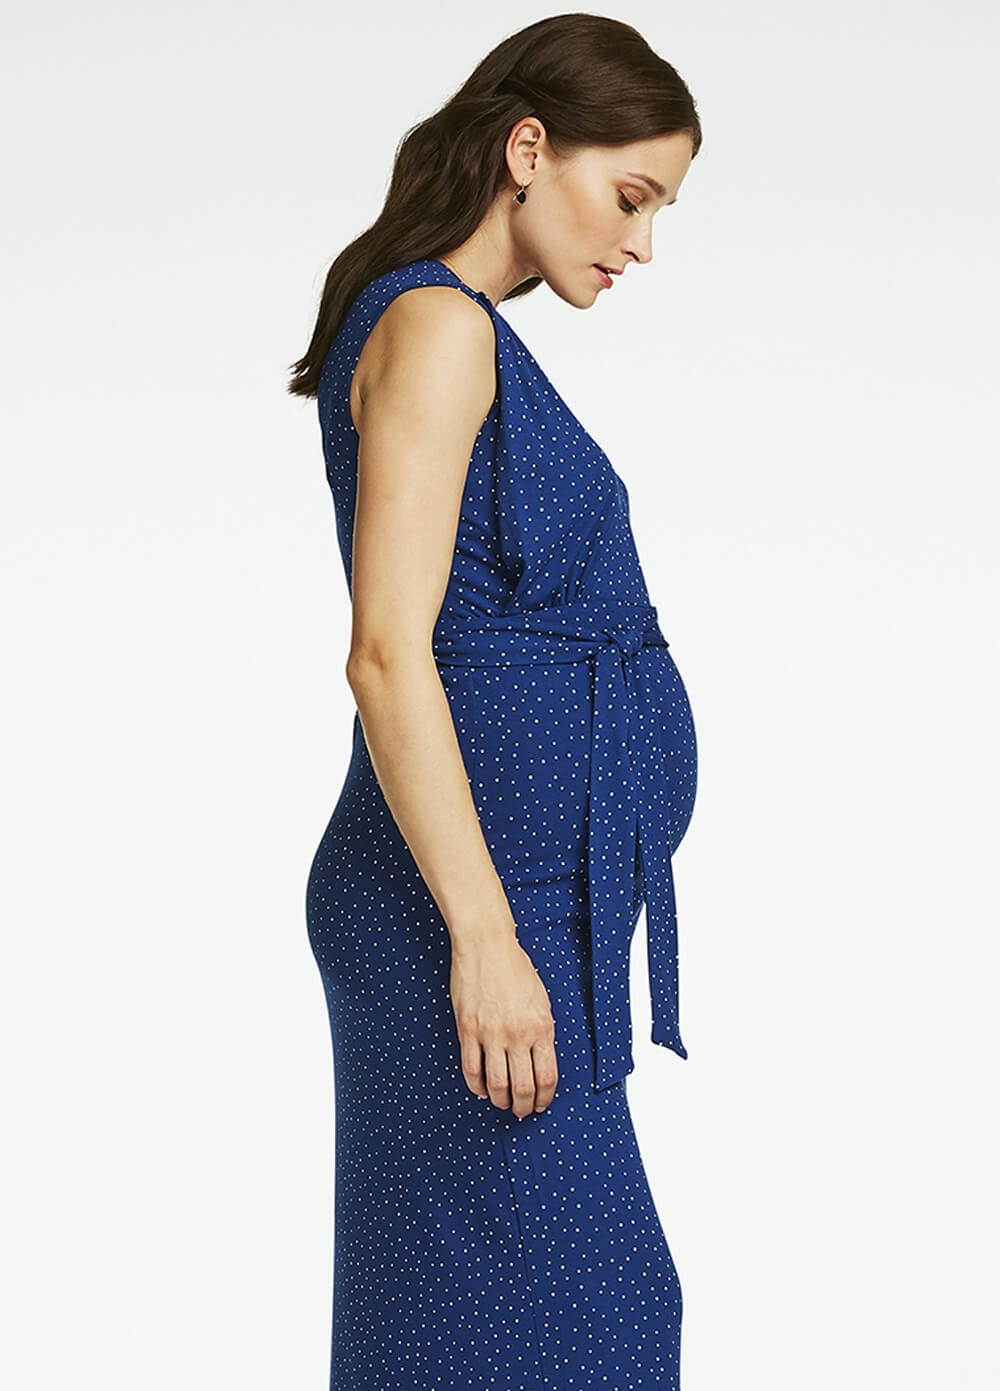 Queen mum - Sodalite Blue Polka Dot Maternity Nursing Maxi